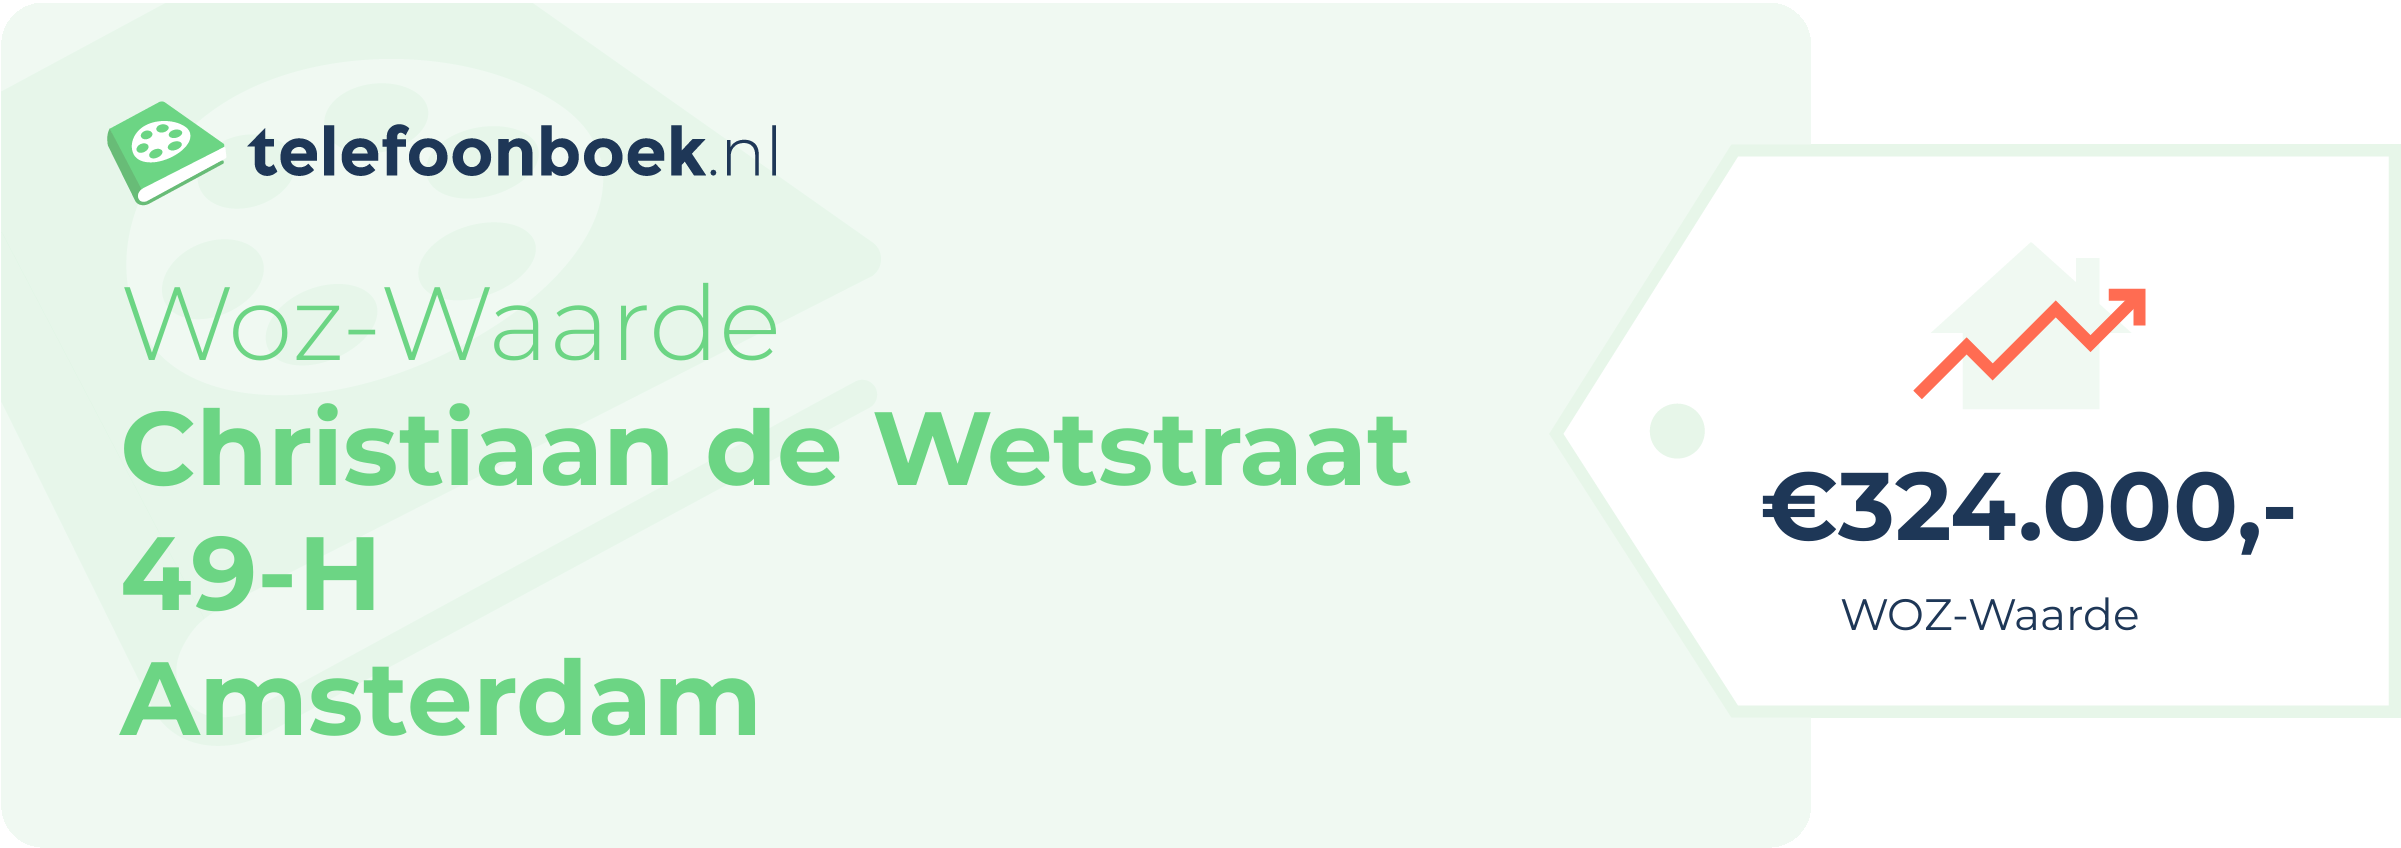 WOZ-waarde Christiaan De Wetstraat 49-H Amsterdam